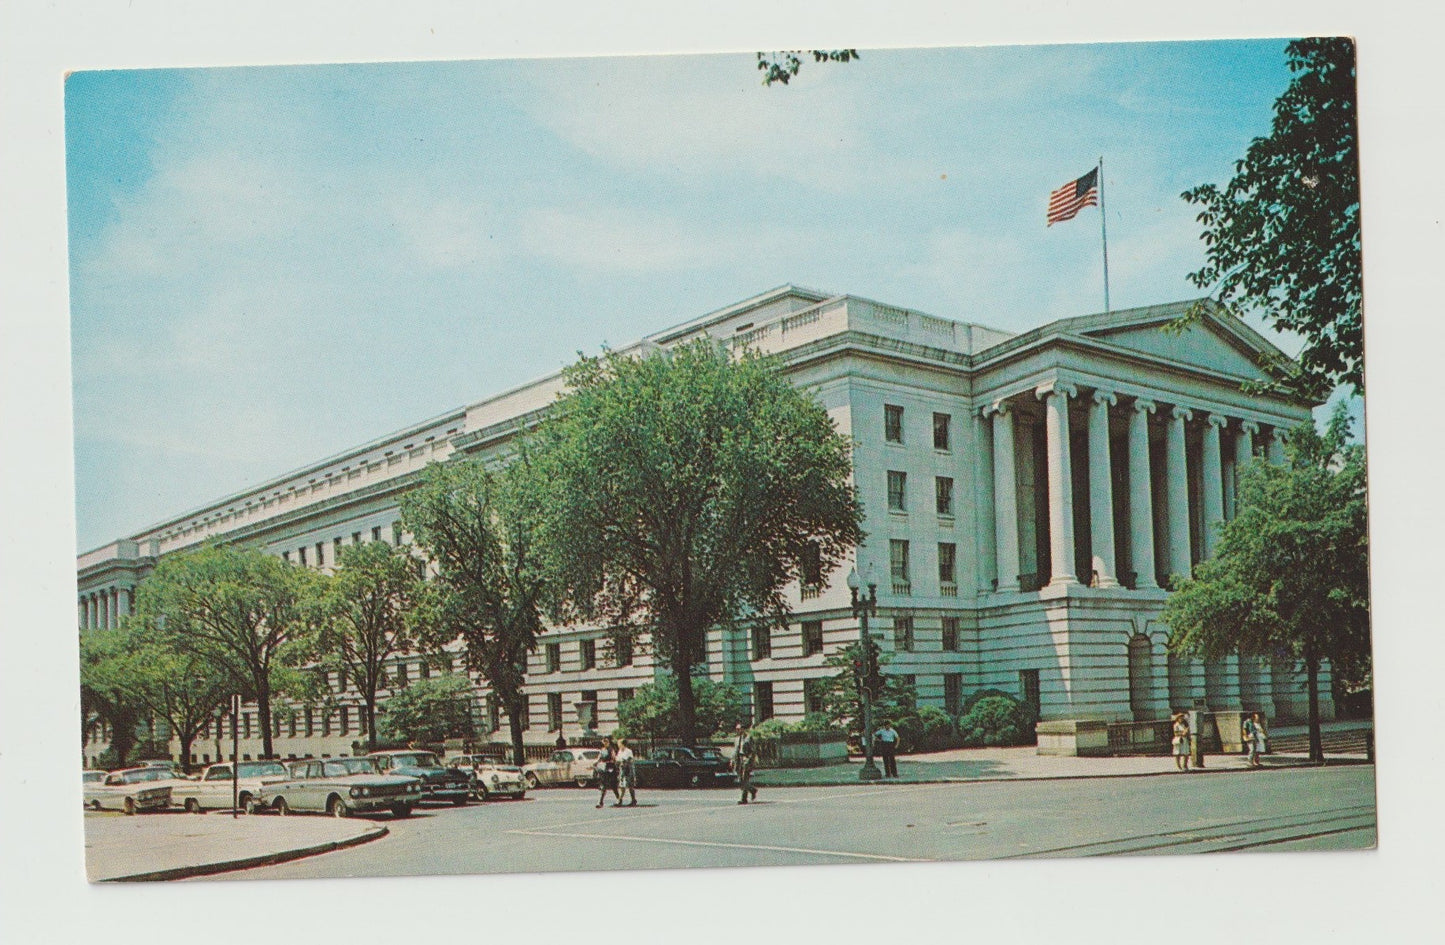 Postcard DC Washington House Office Capitol Hill 1962 Chrome Unused